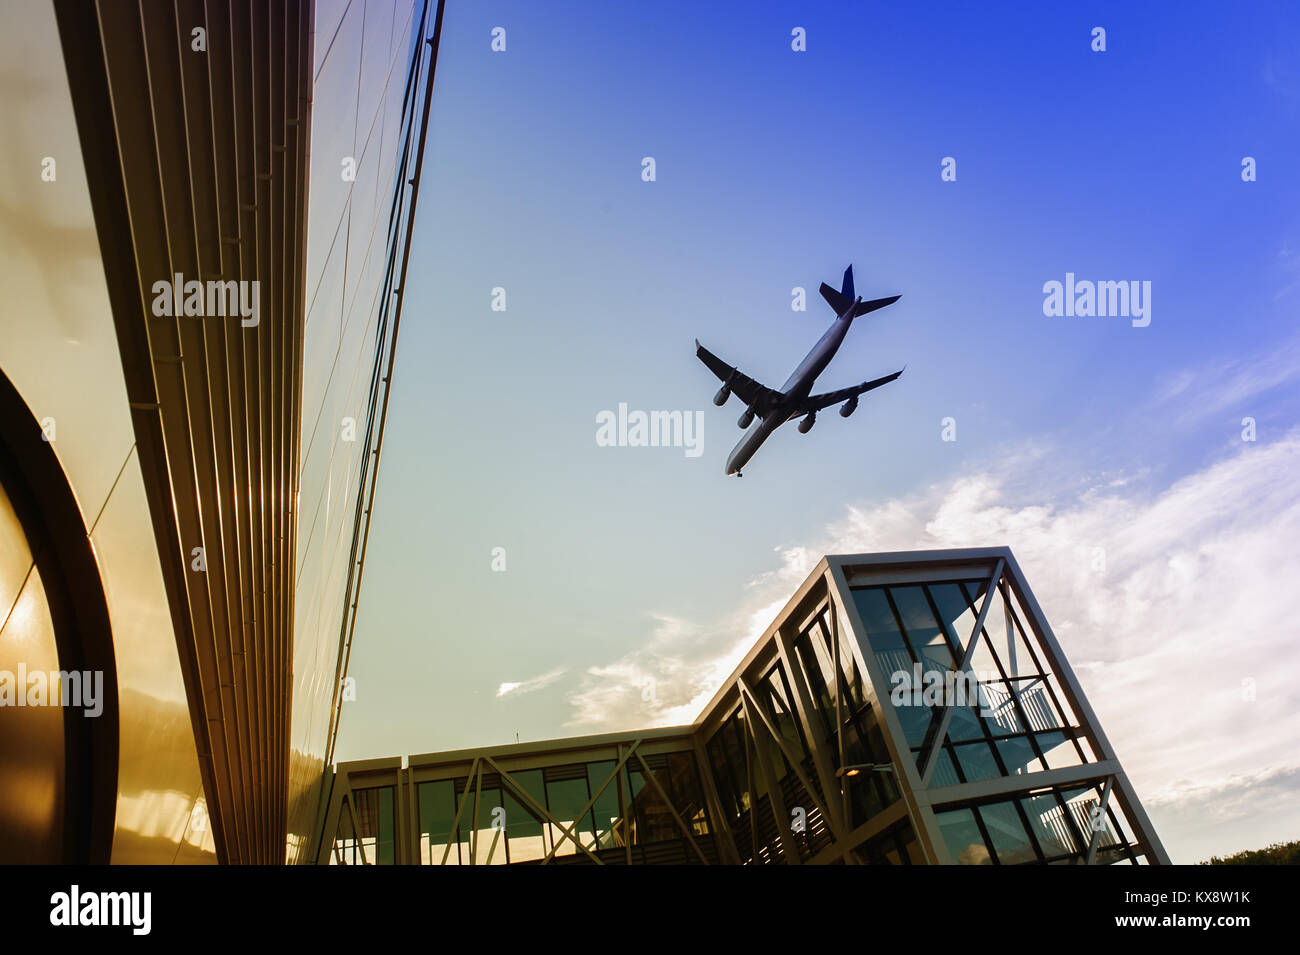 Ebene in der Landung Passagierflugzeug Stockfoto